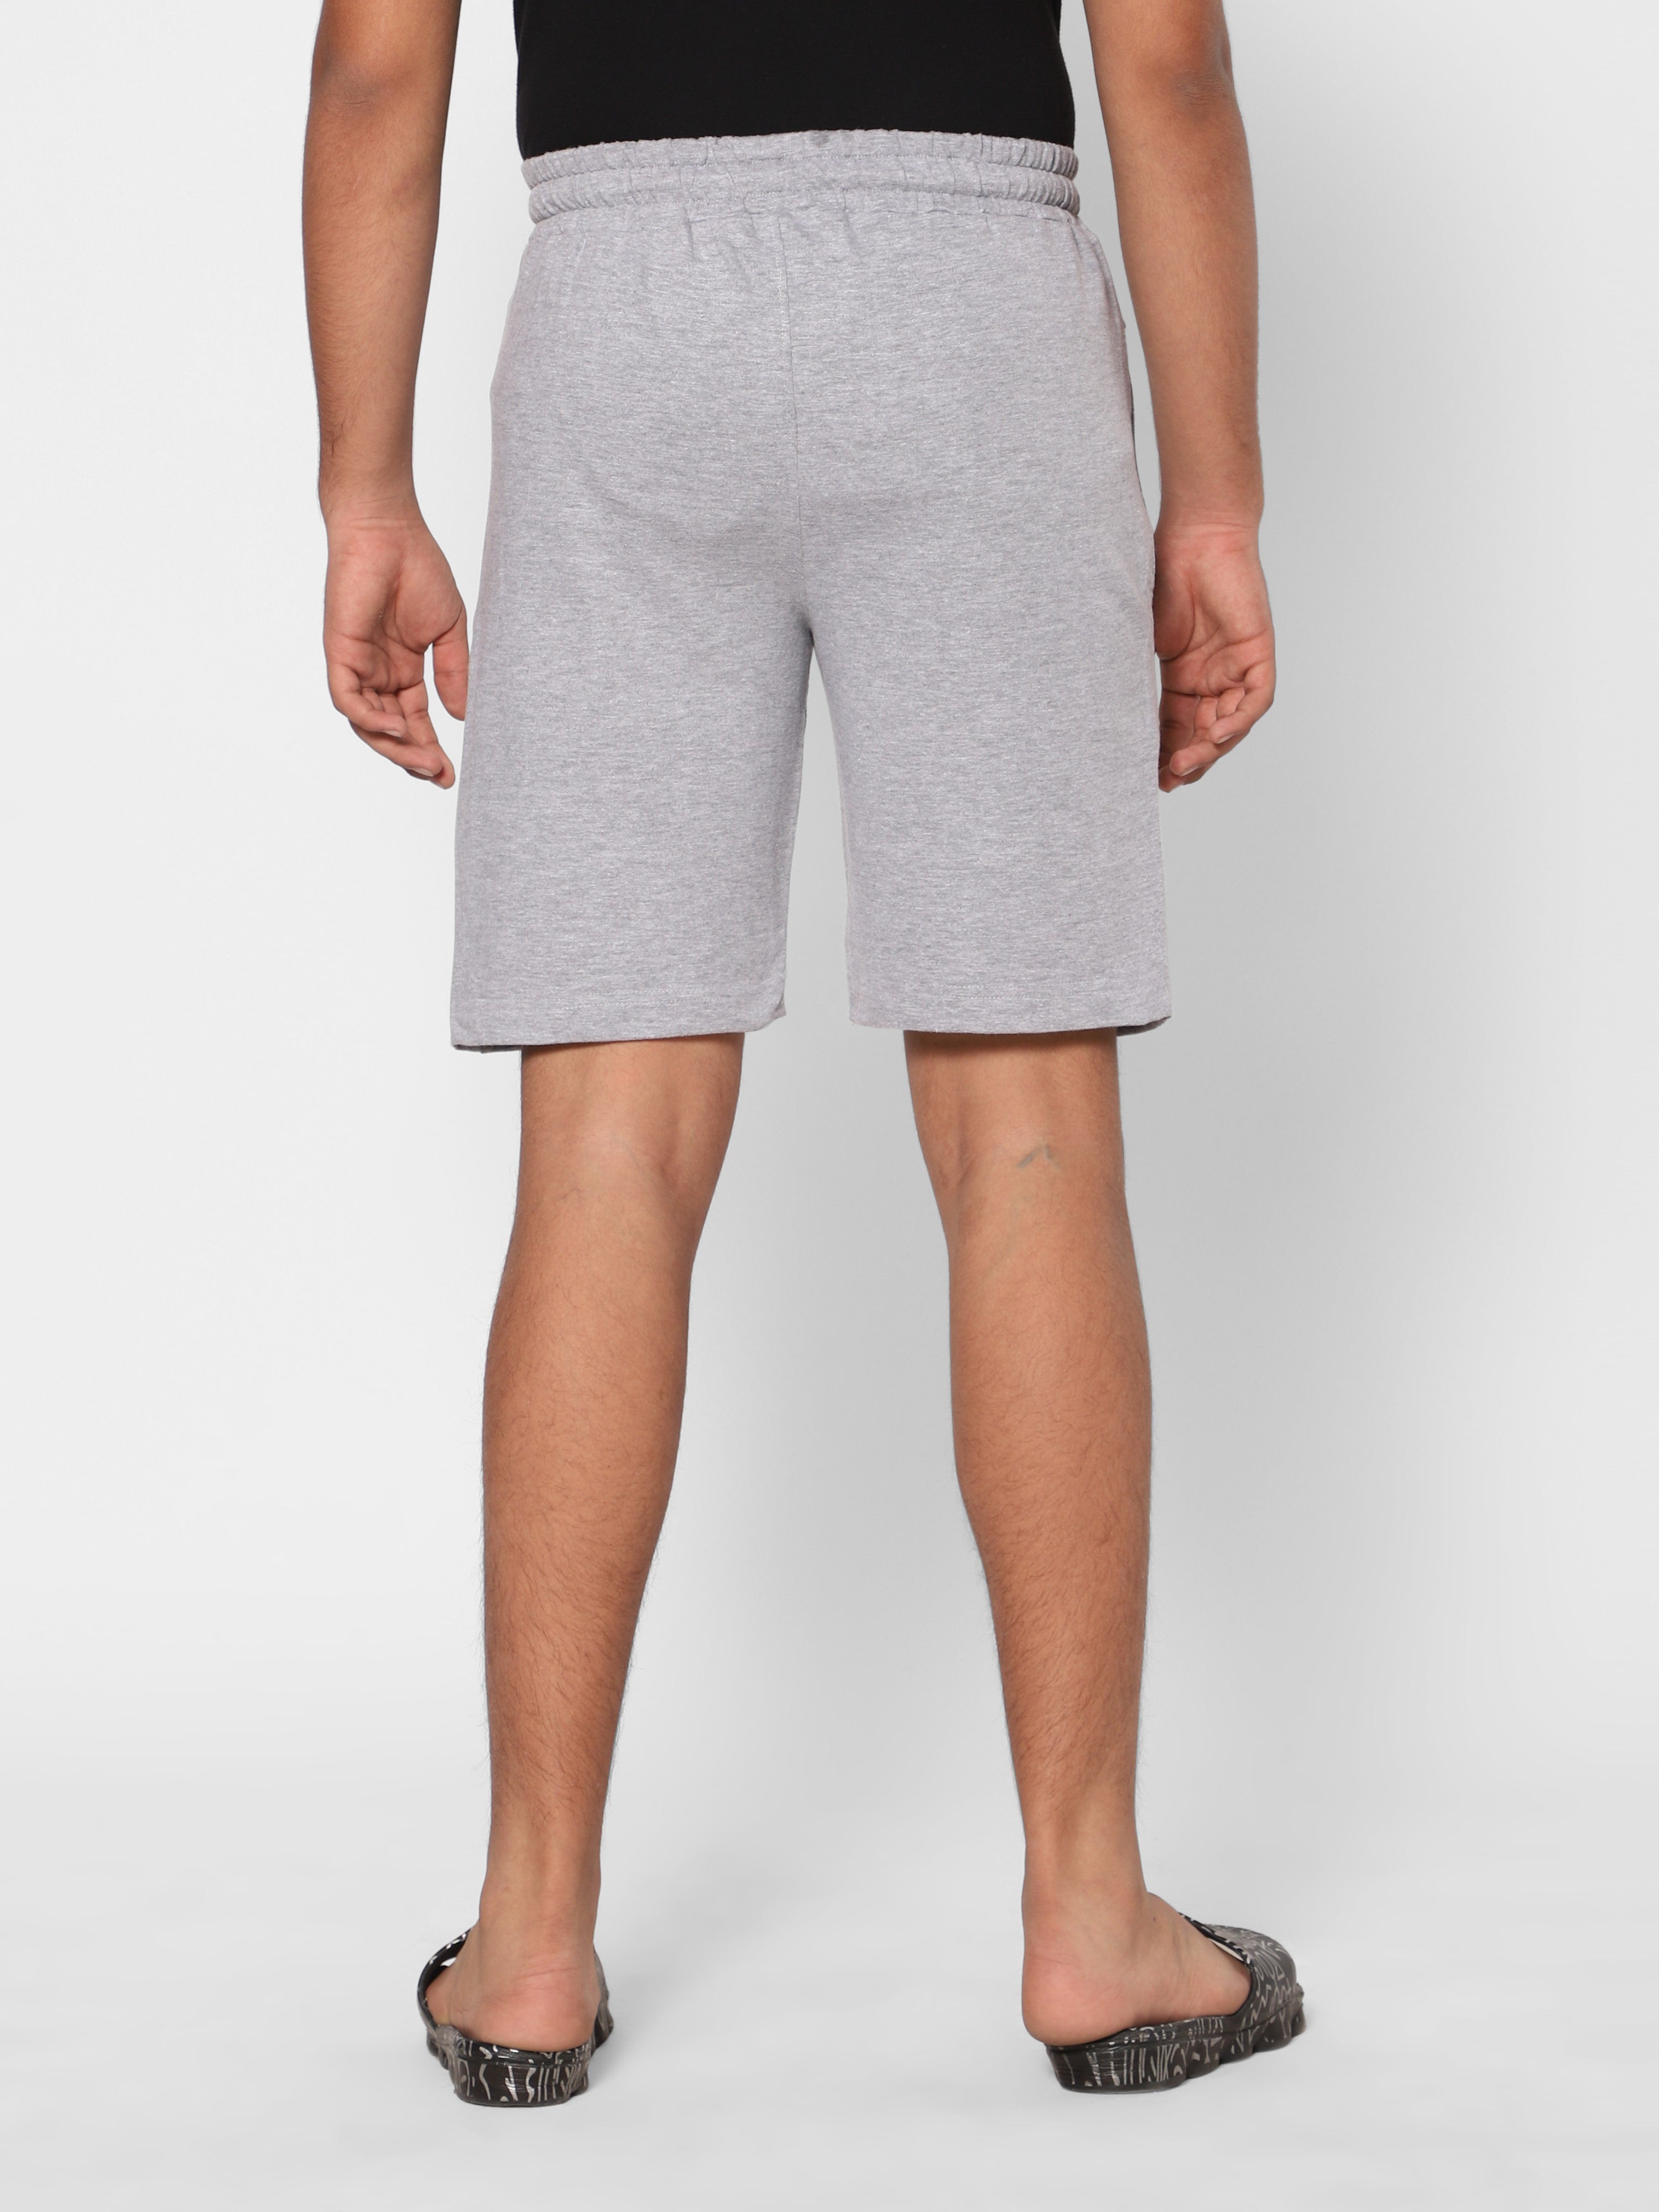 TeenTrums Boys Knitted Shorts-Grey Melange